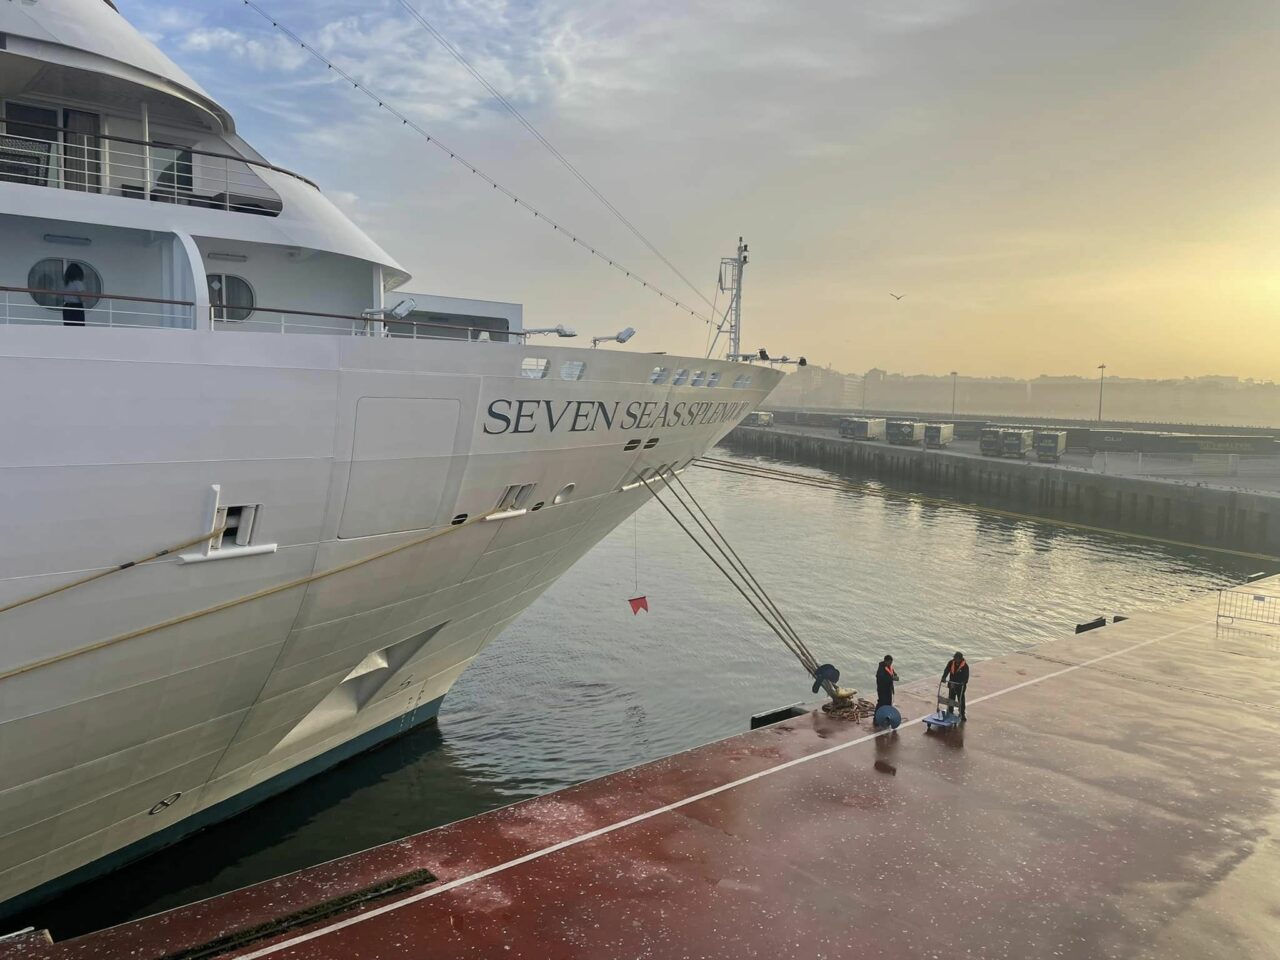 Seven Seas Splendor (Regent) i Porto, Portugal